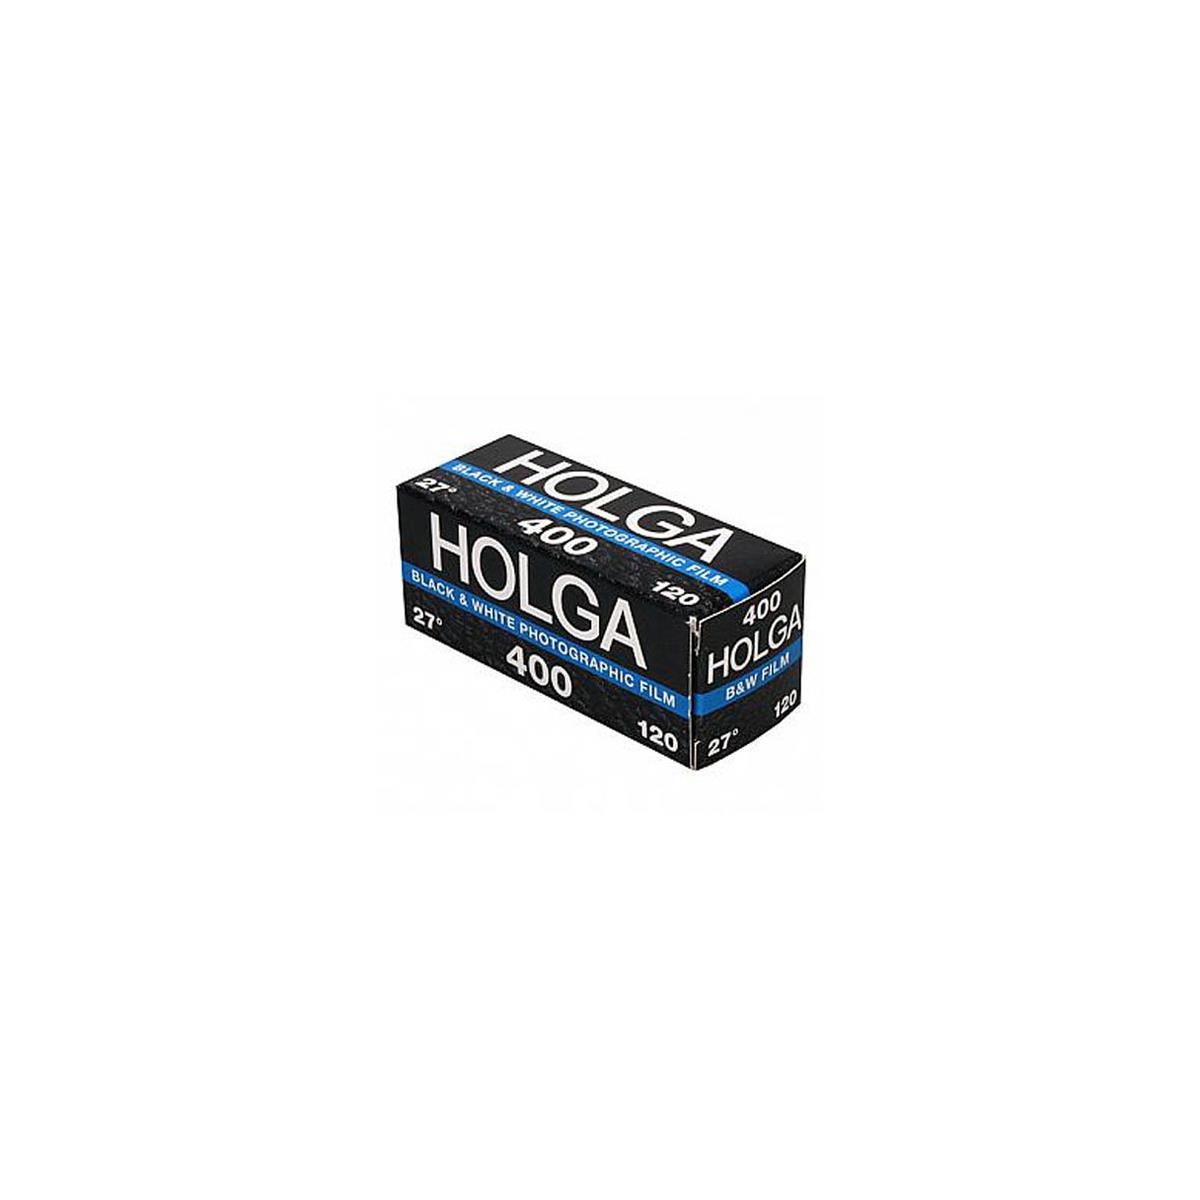 

Holga 120 Black and White Film